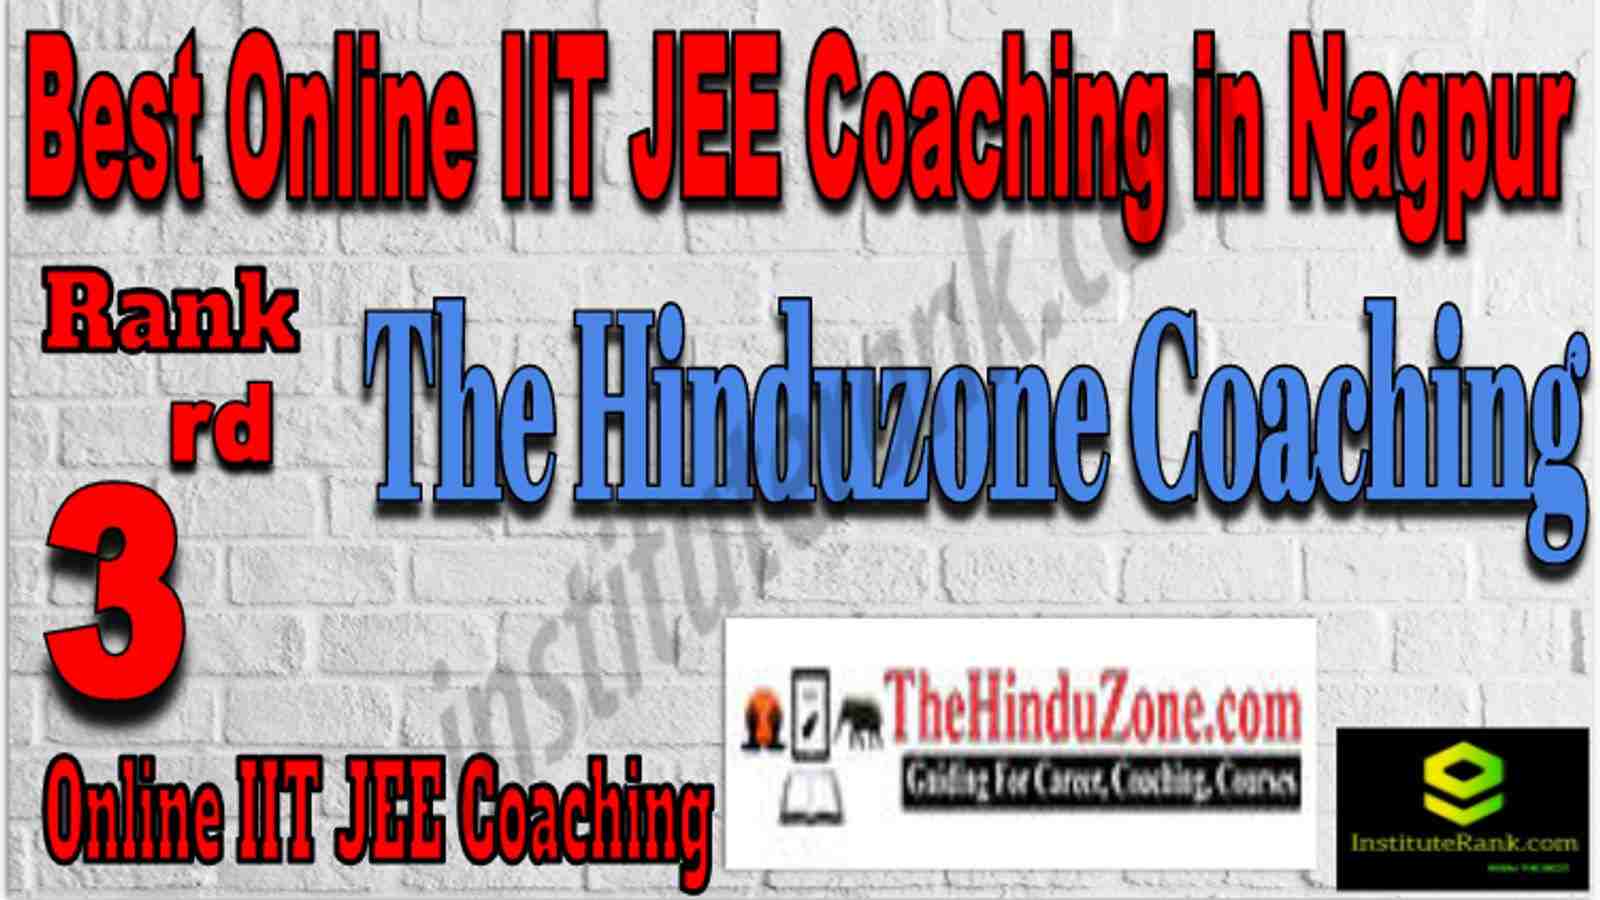 Rank 3 Best Online IIT JEE Coaching in Nagpur